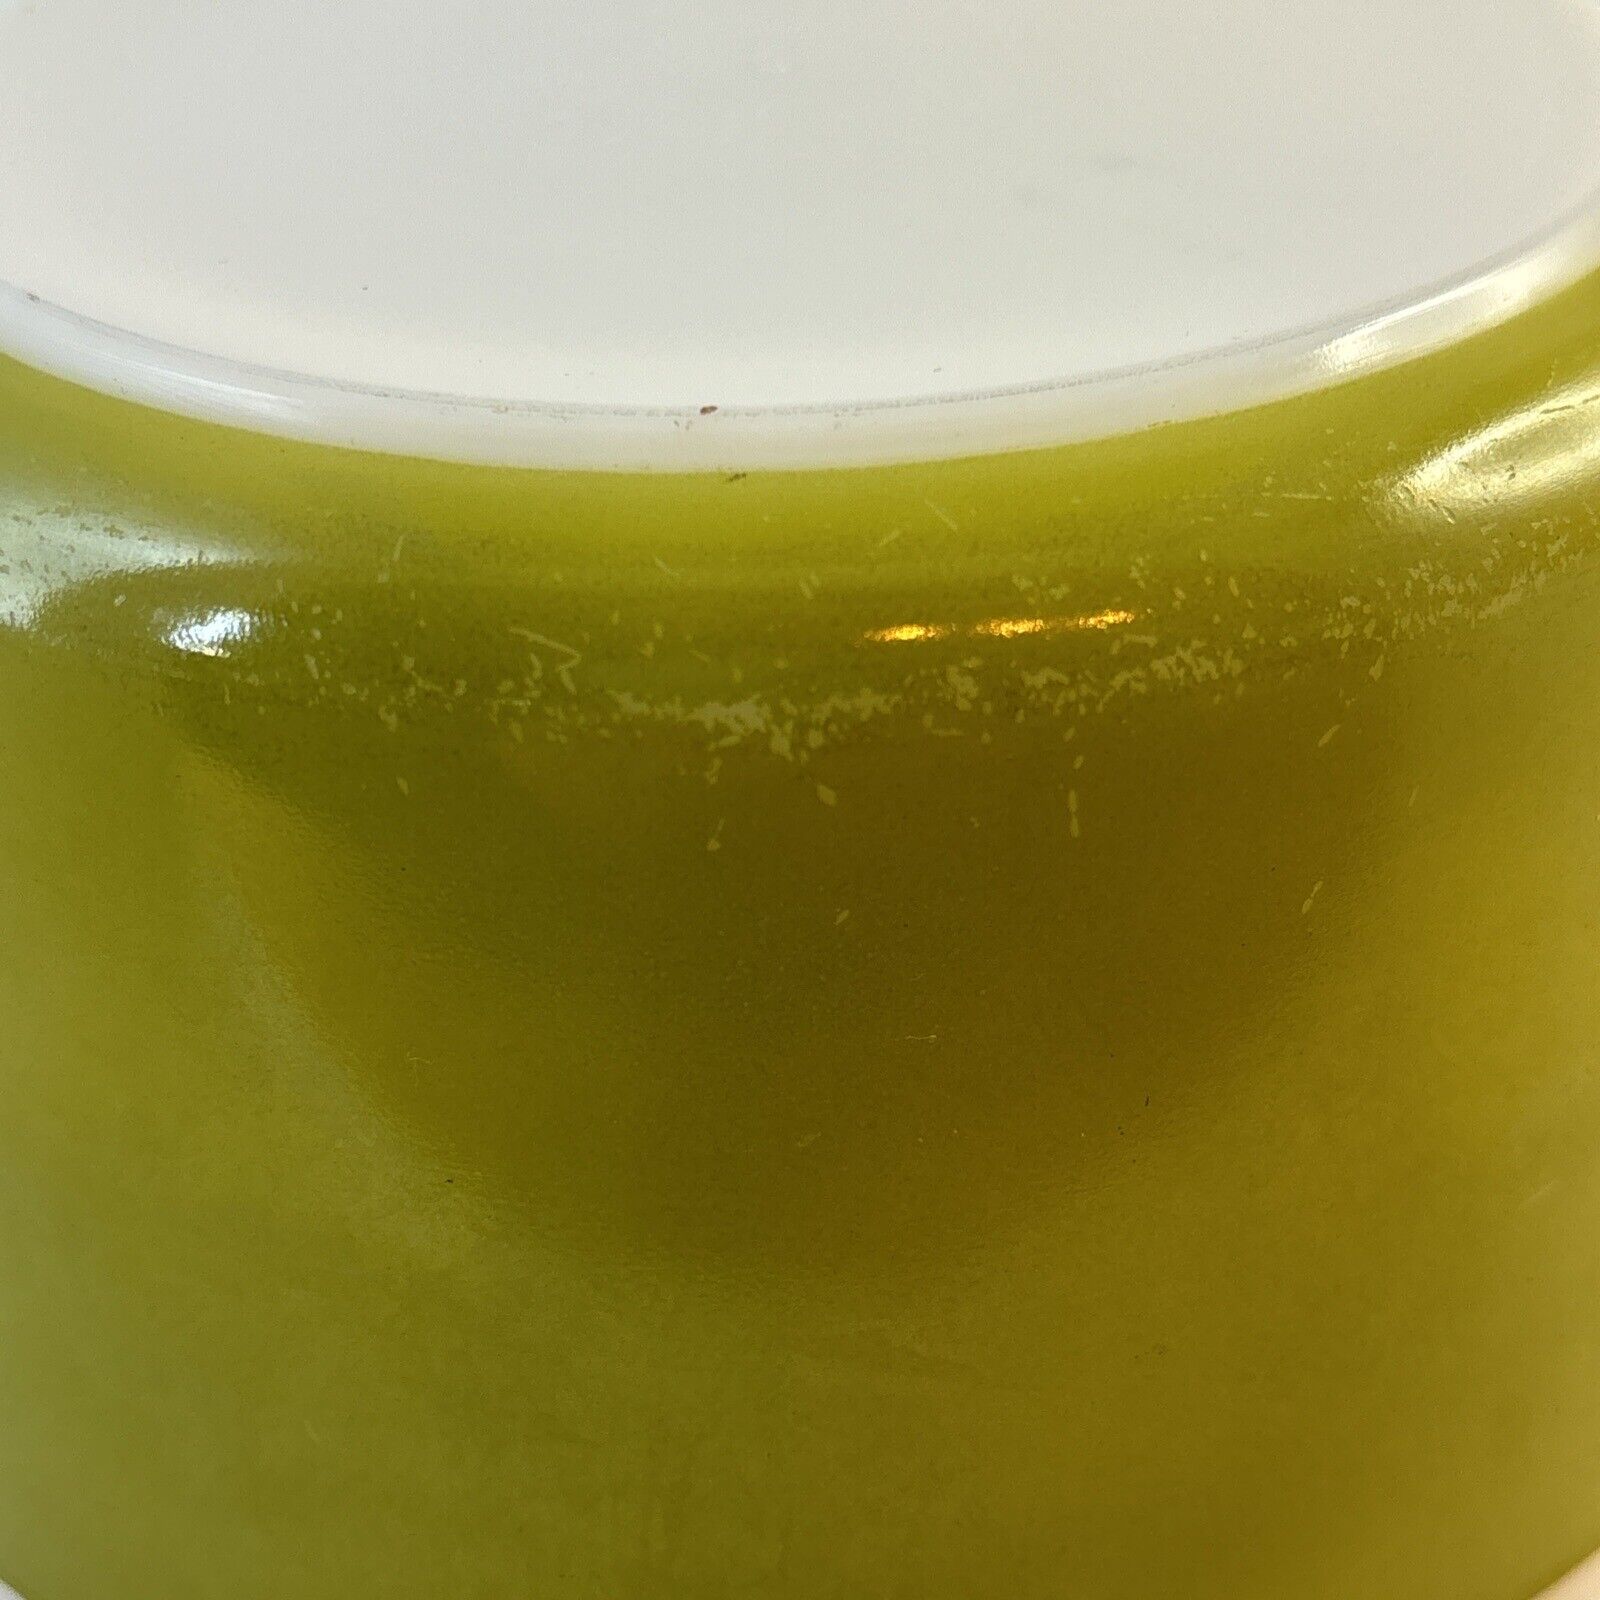 Vintage Corning Ware Avocado Green Casserole Baking Dish Pot 4 QT P-704-B NO LID